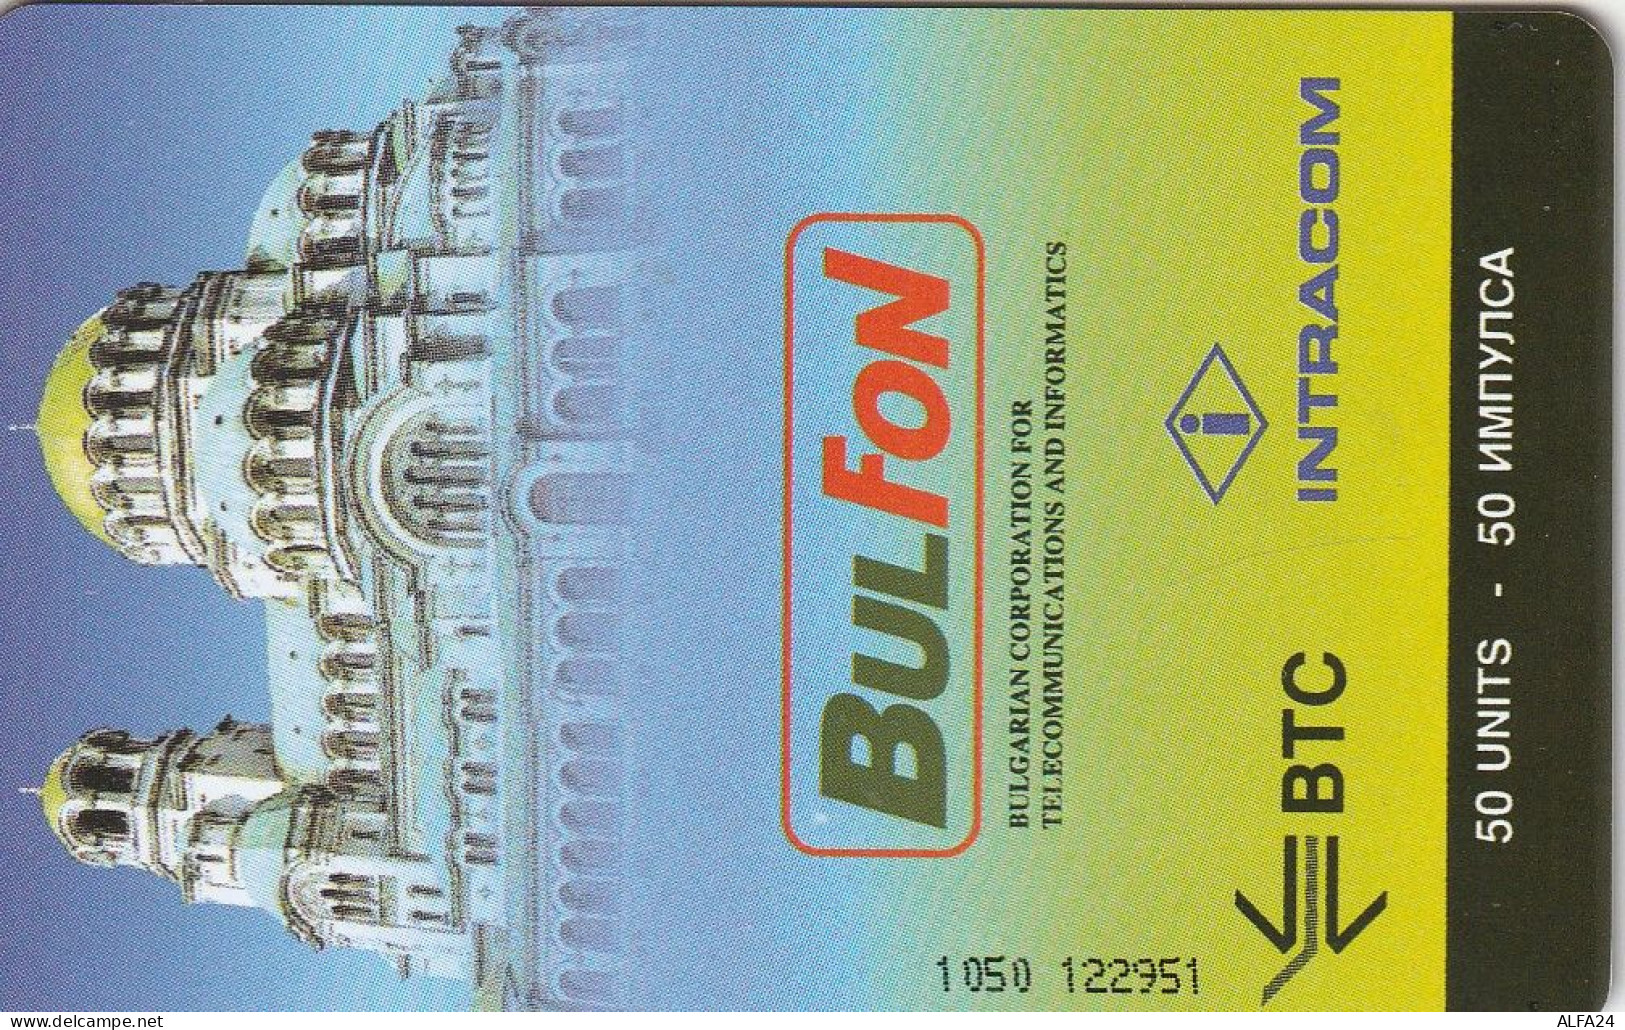 PHONE CARD BULGARIA  (E4.22.7 - Bulgarien